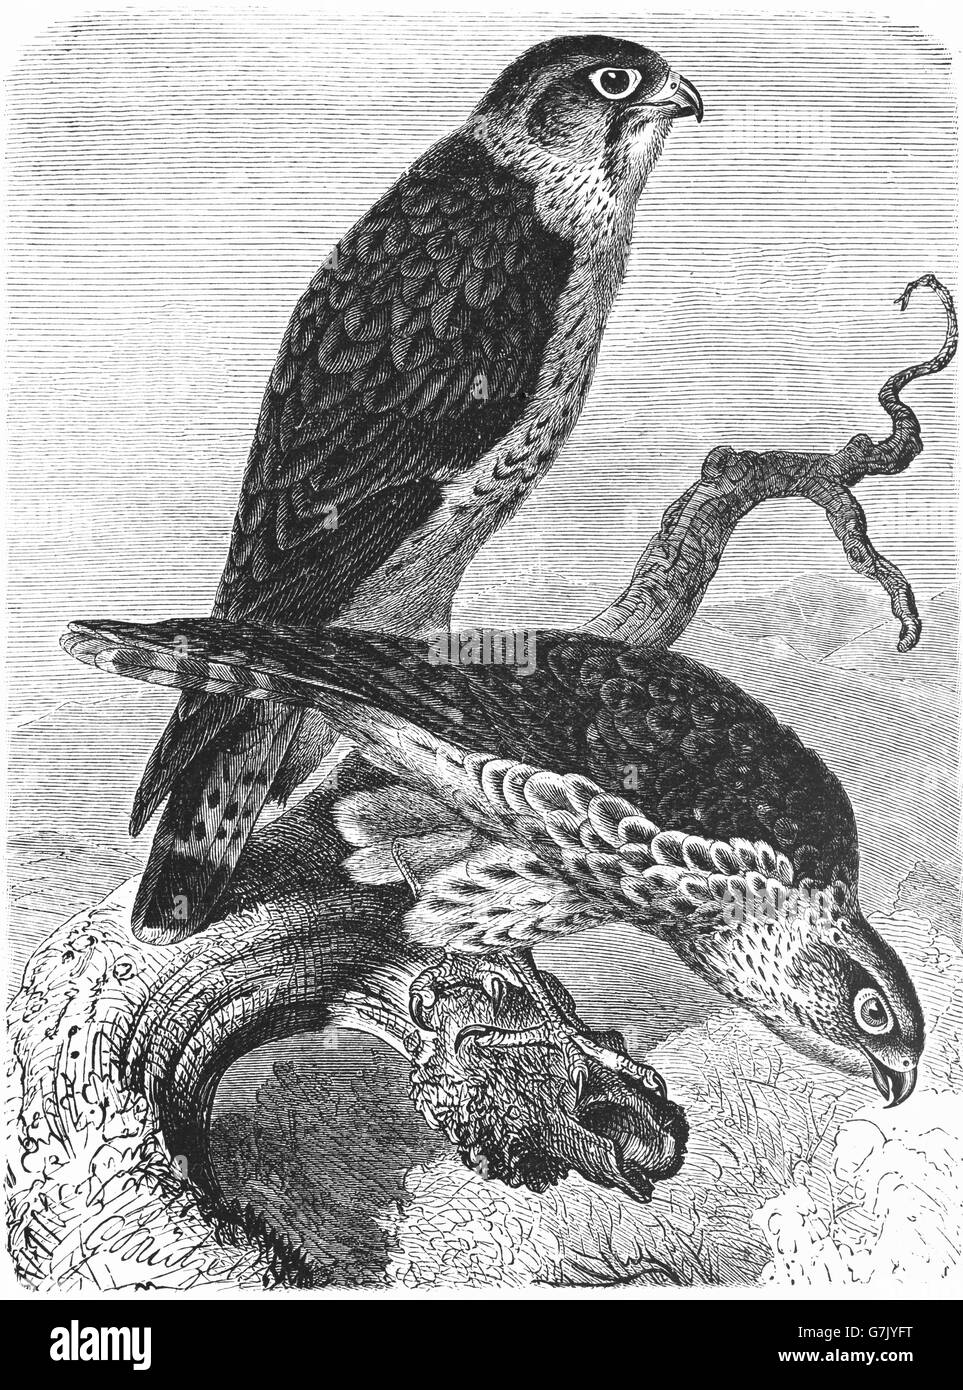 Merlin, Falco columbarius, pigeon hawk, illustration from book dated 1904 Stock Photo